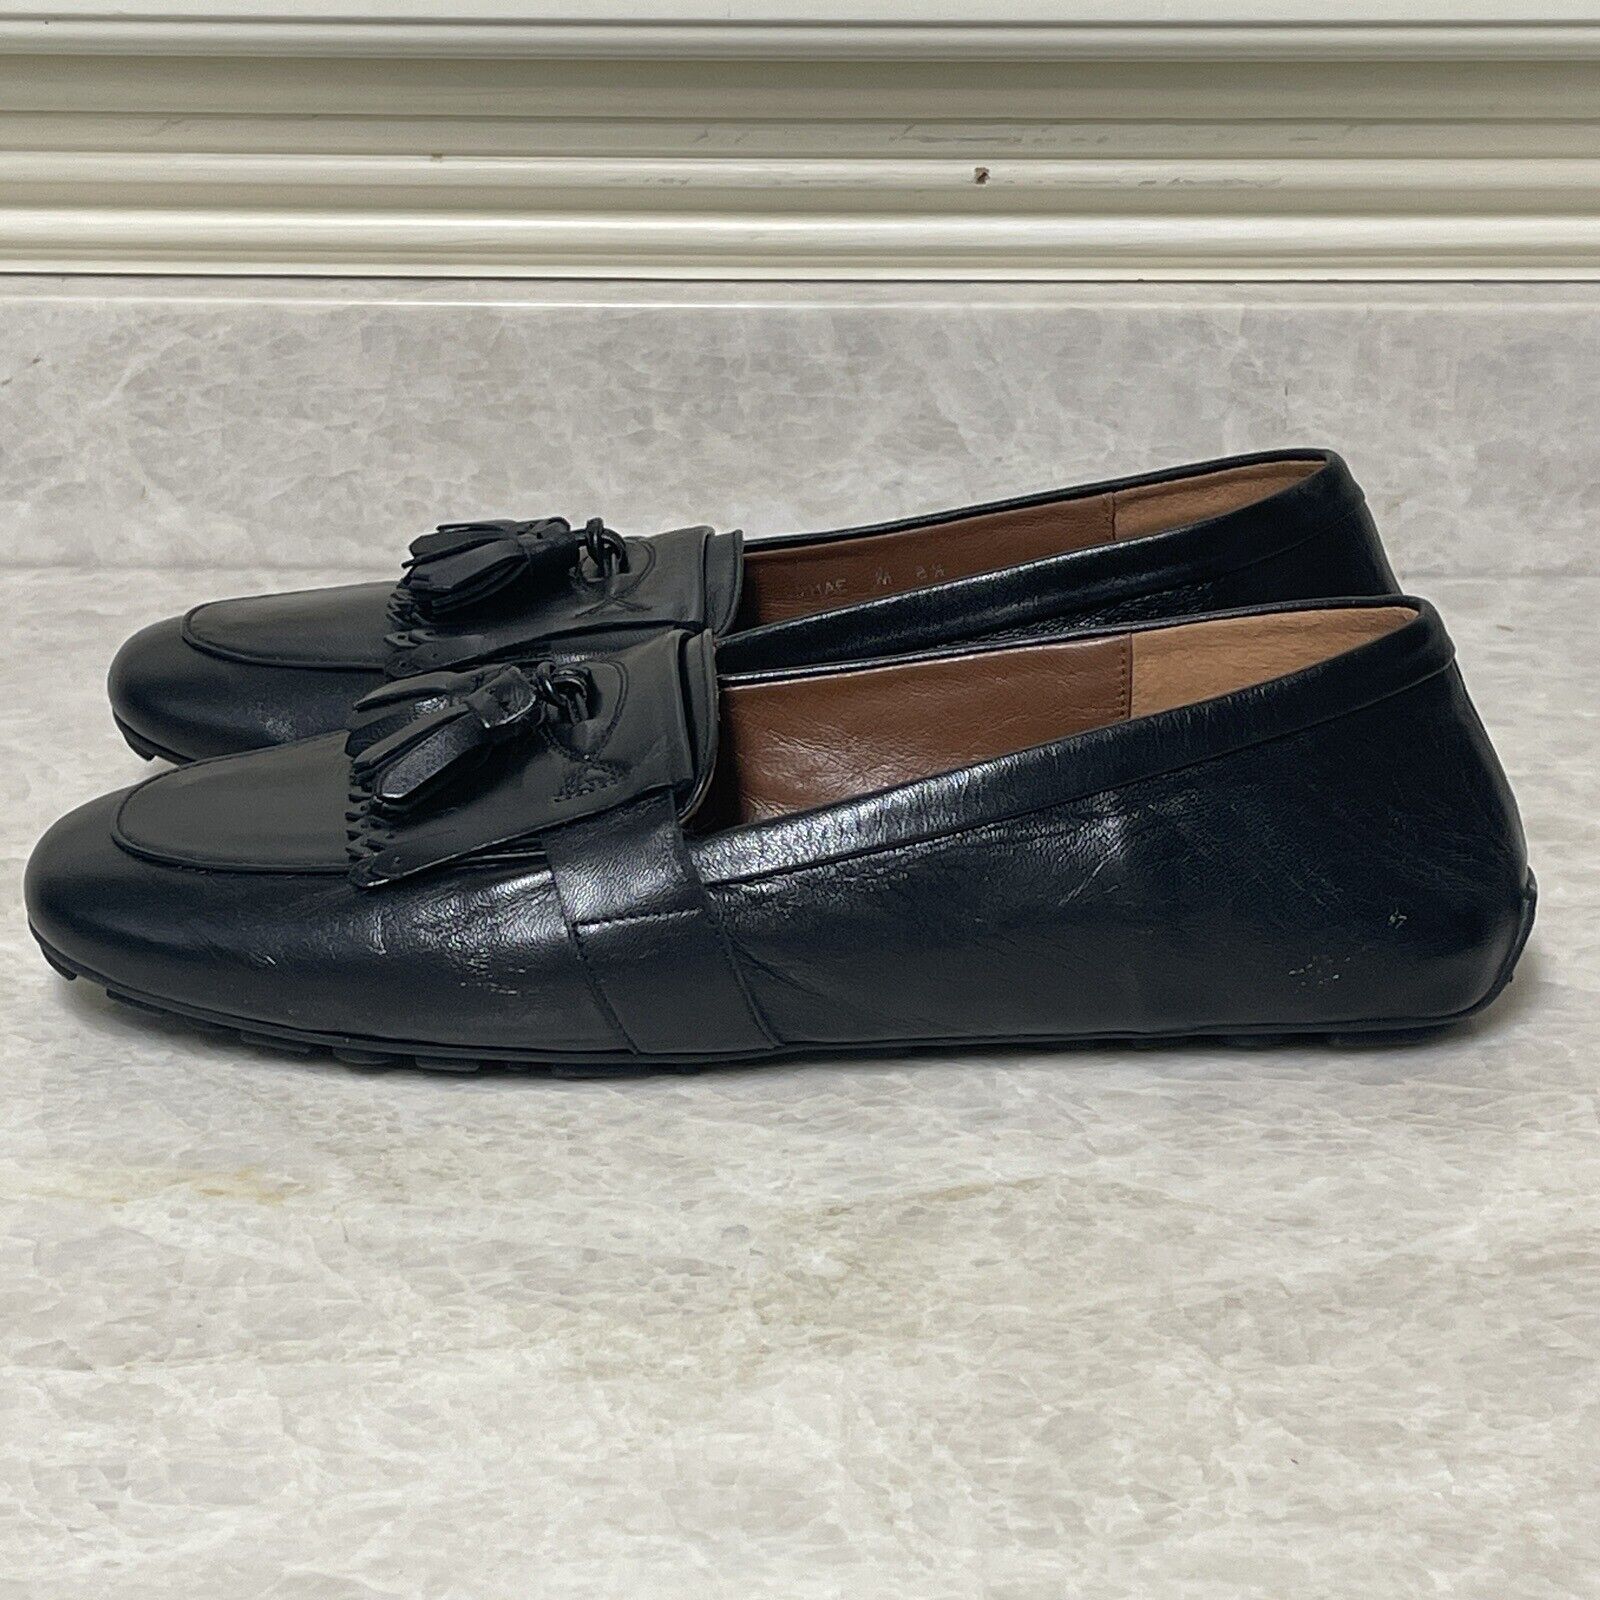 Aquatalia Women's Quinna Driving Shoes Flat Black Leather Tassel Moc Size 8.5